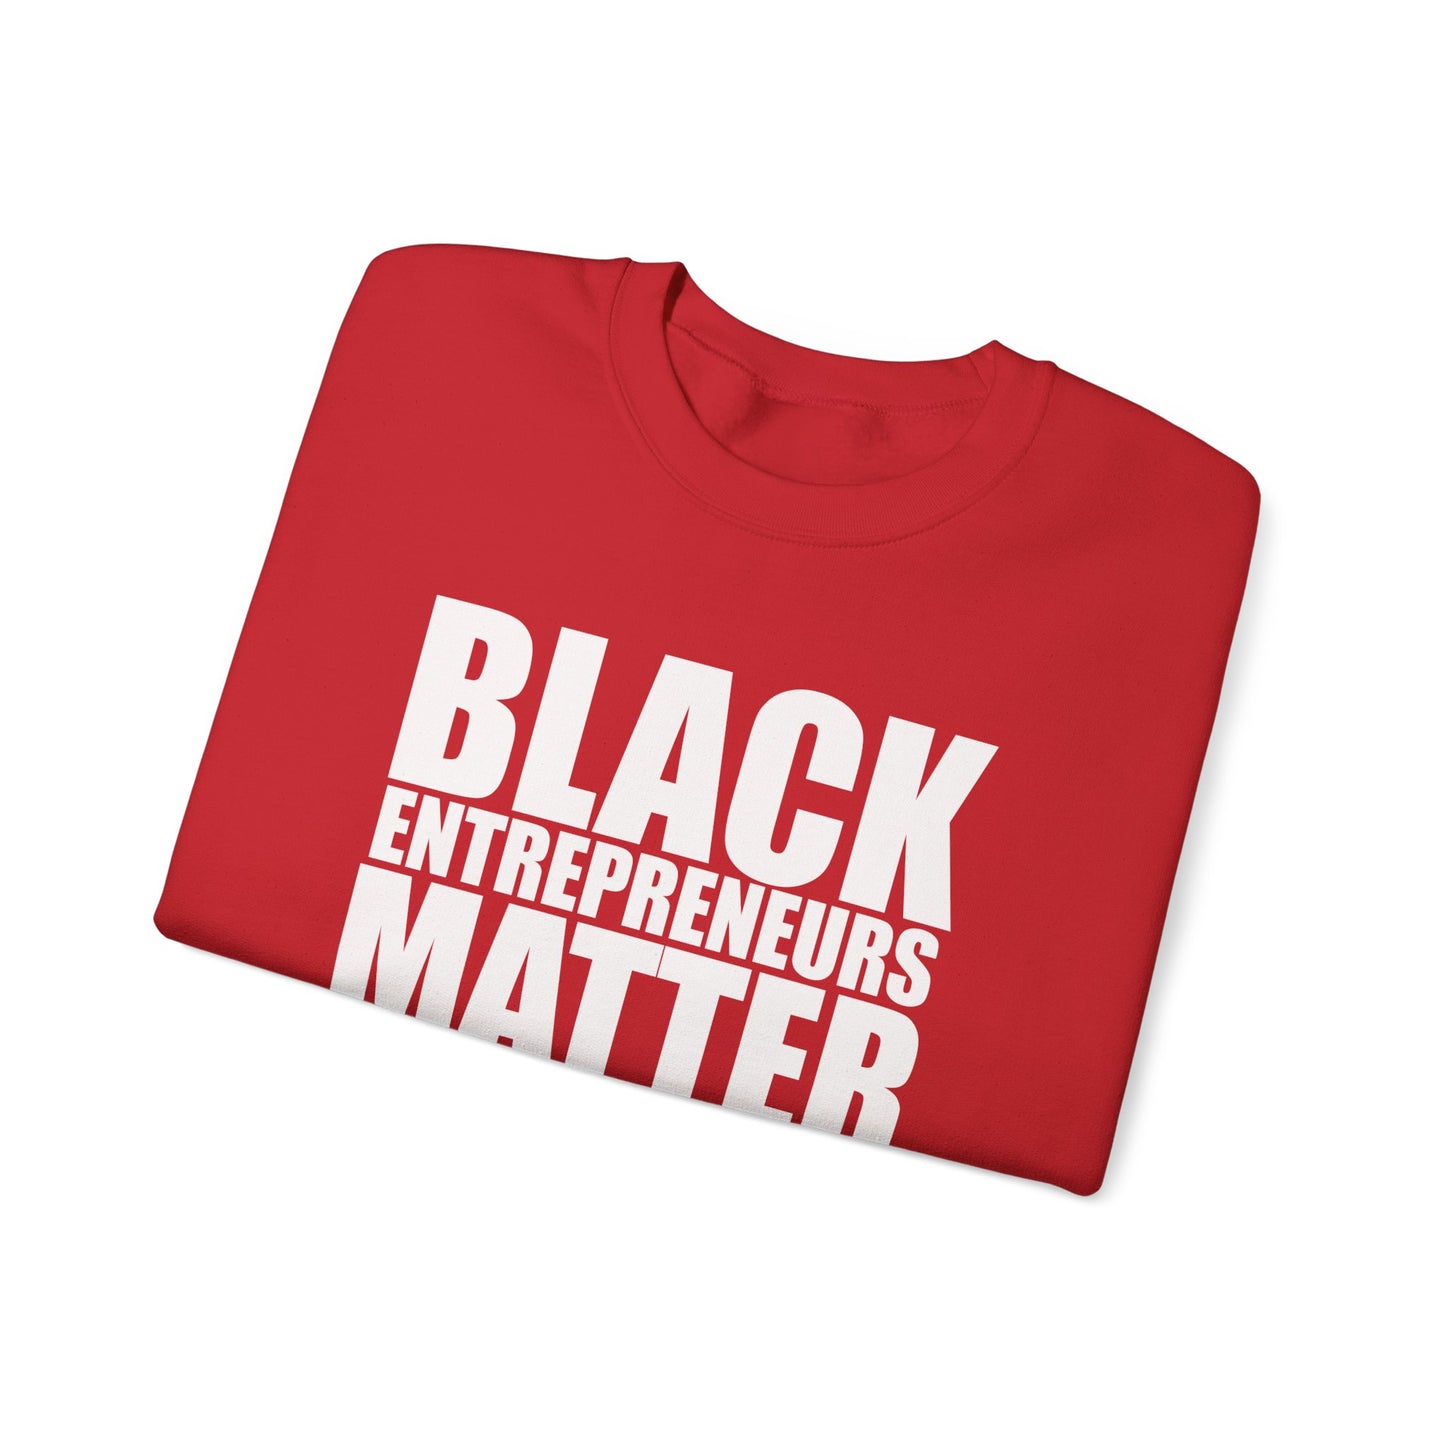 Black Entrepreneurs Matter Unisex Heavy Blend™ Crewneck Sweatshirt